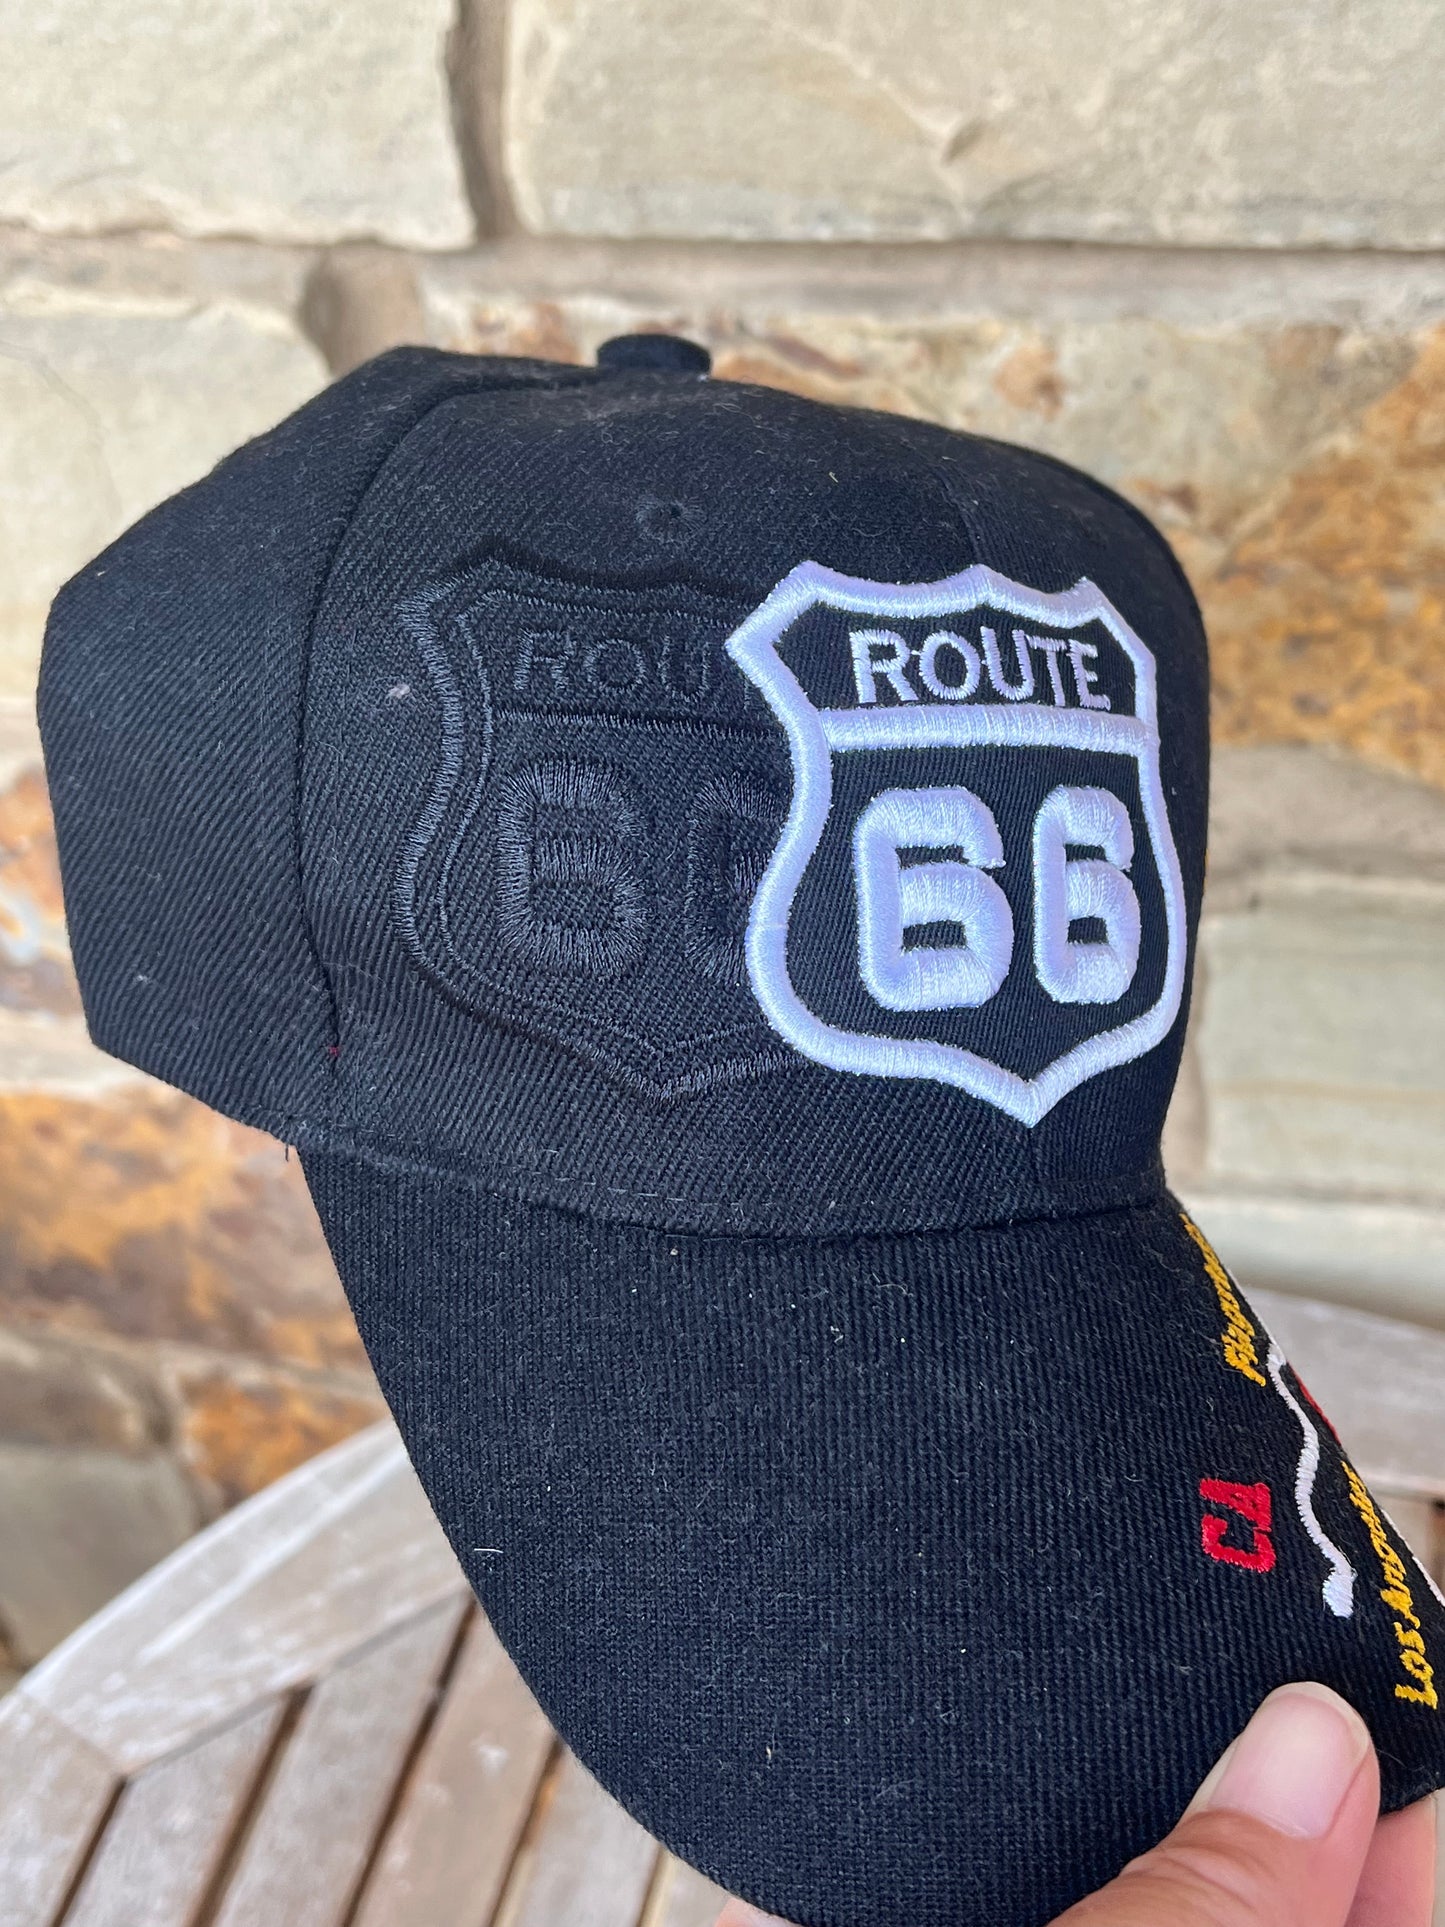 Route 66 Ball Cap